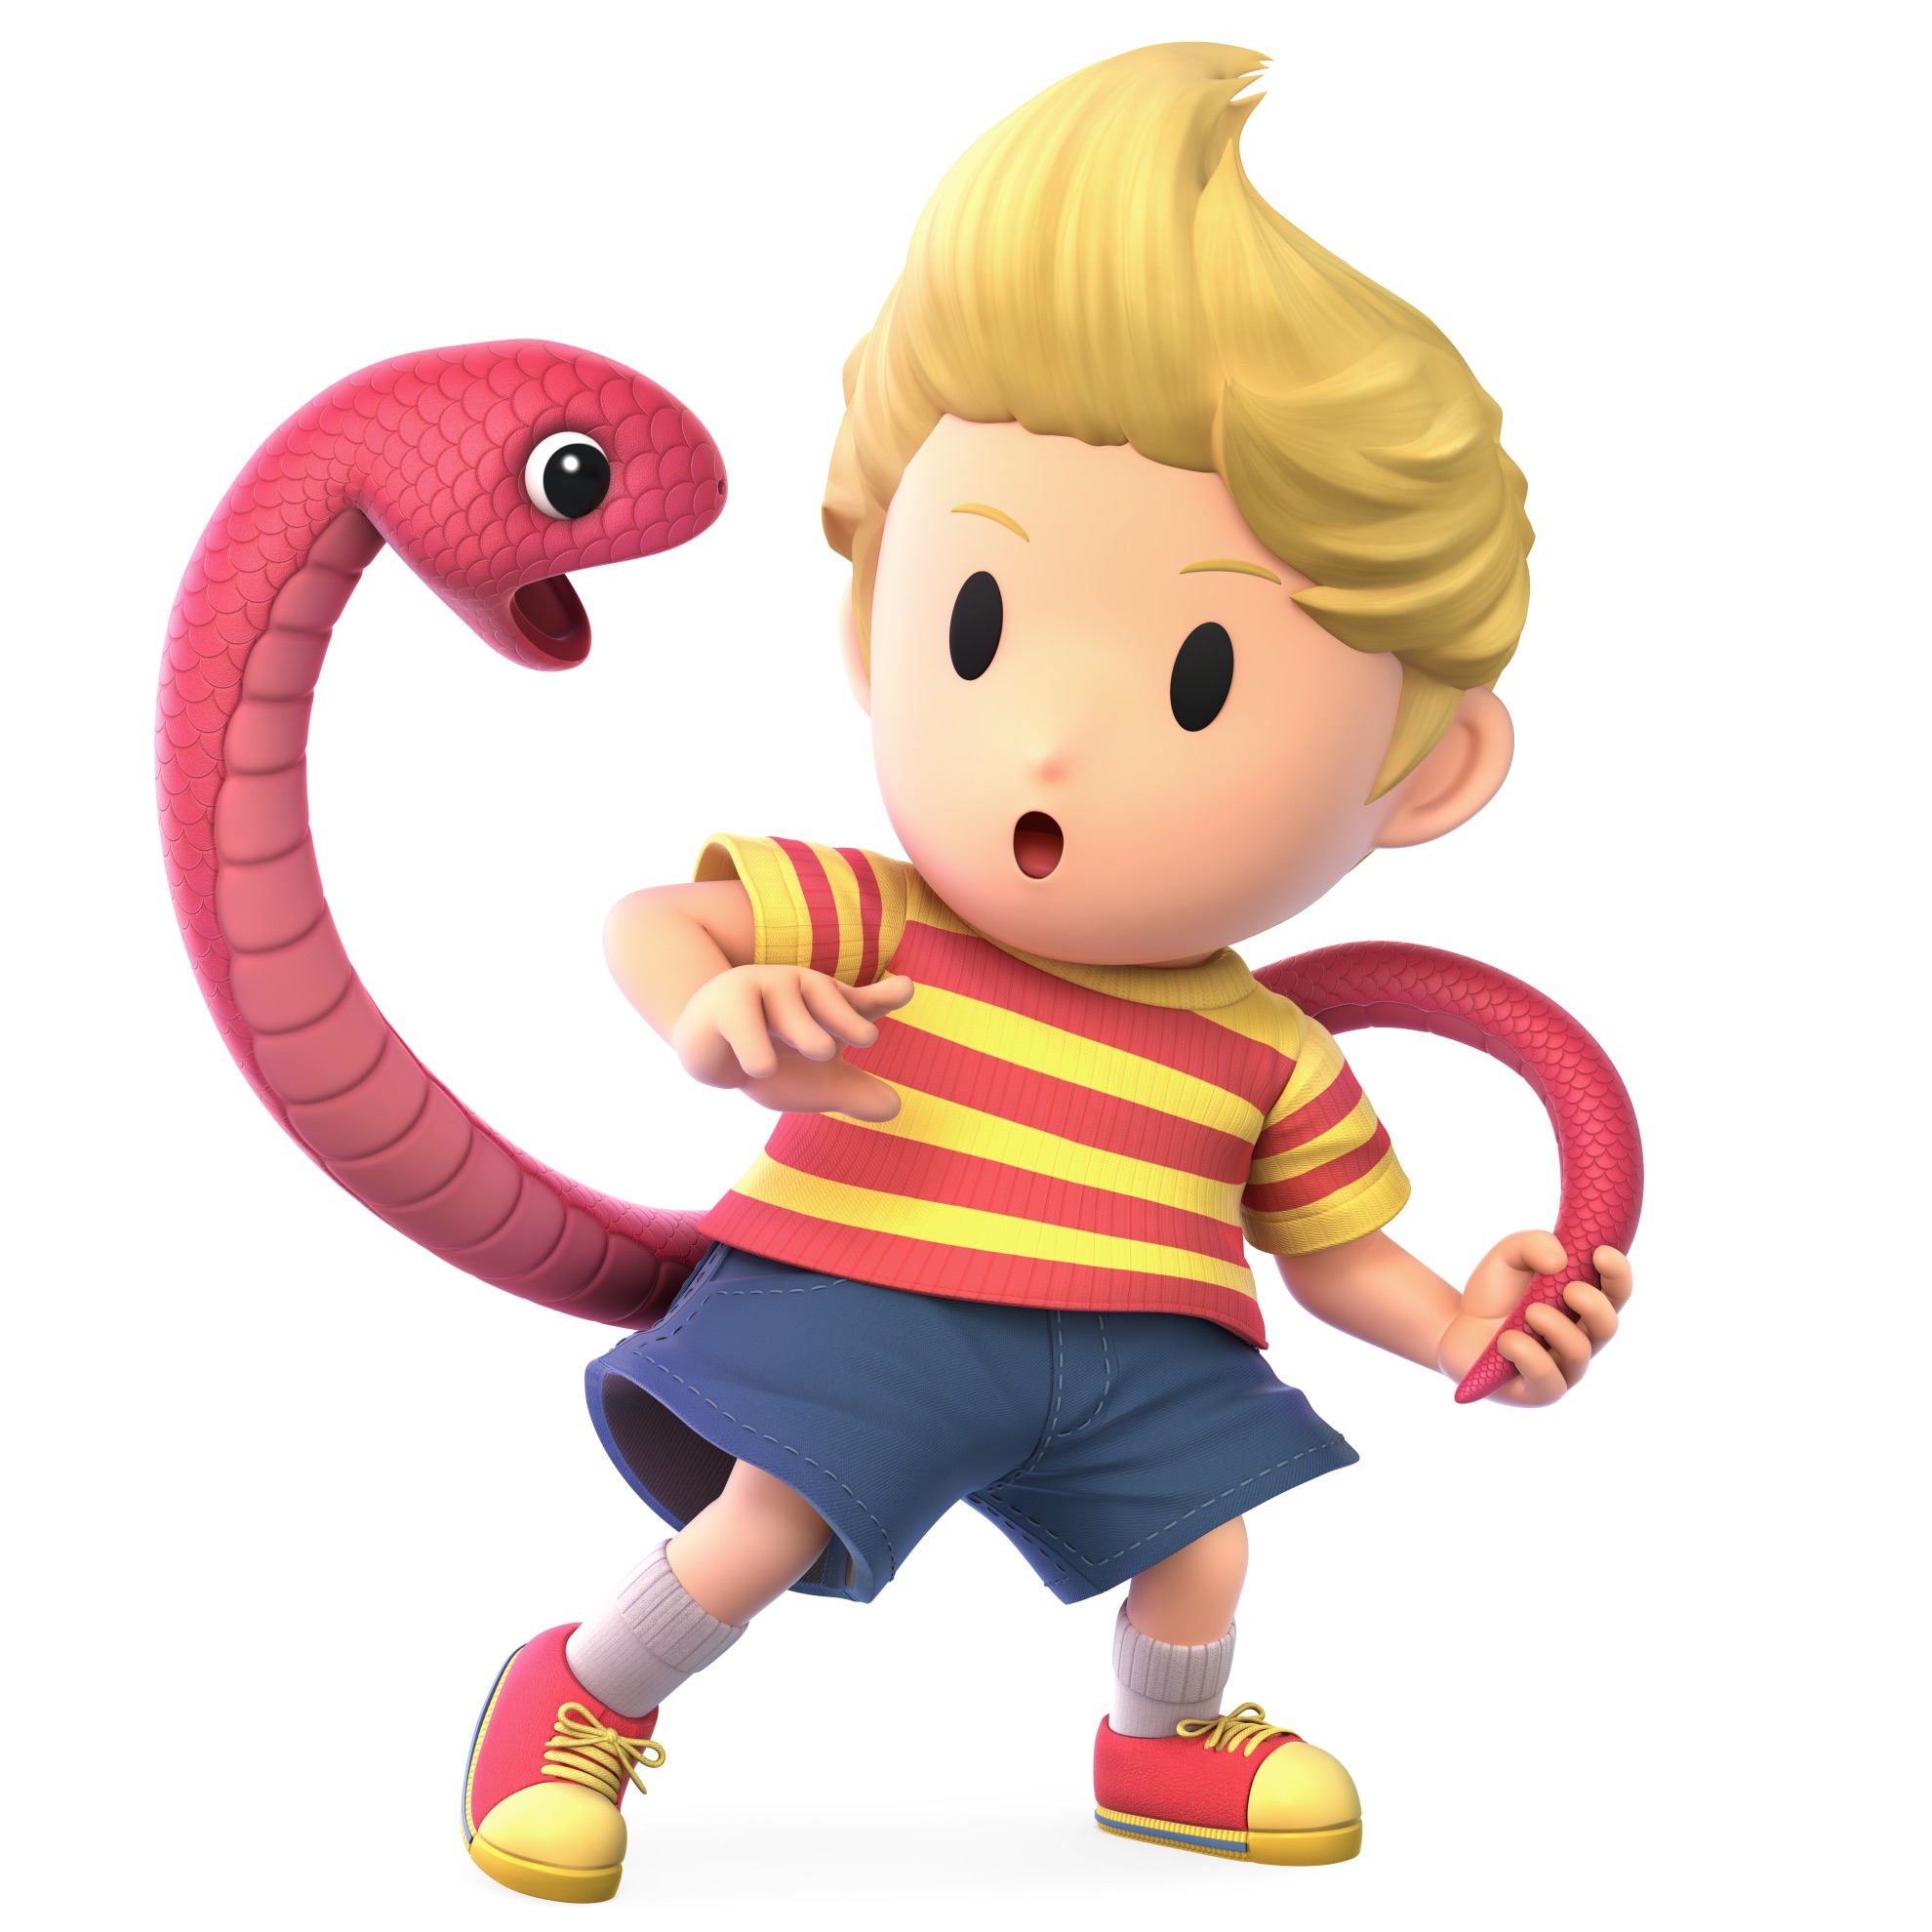 Lucas Super Smash Bros. Ultimate Character Render